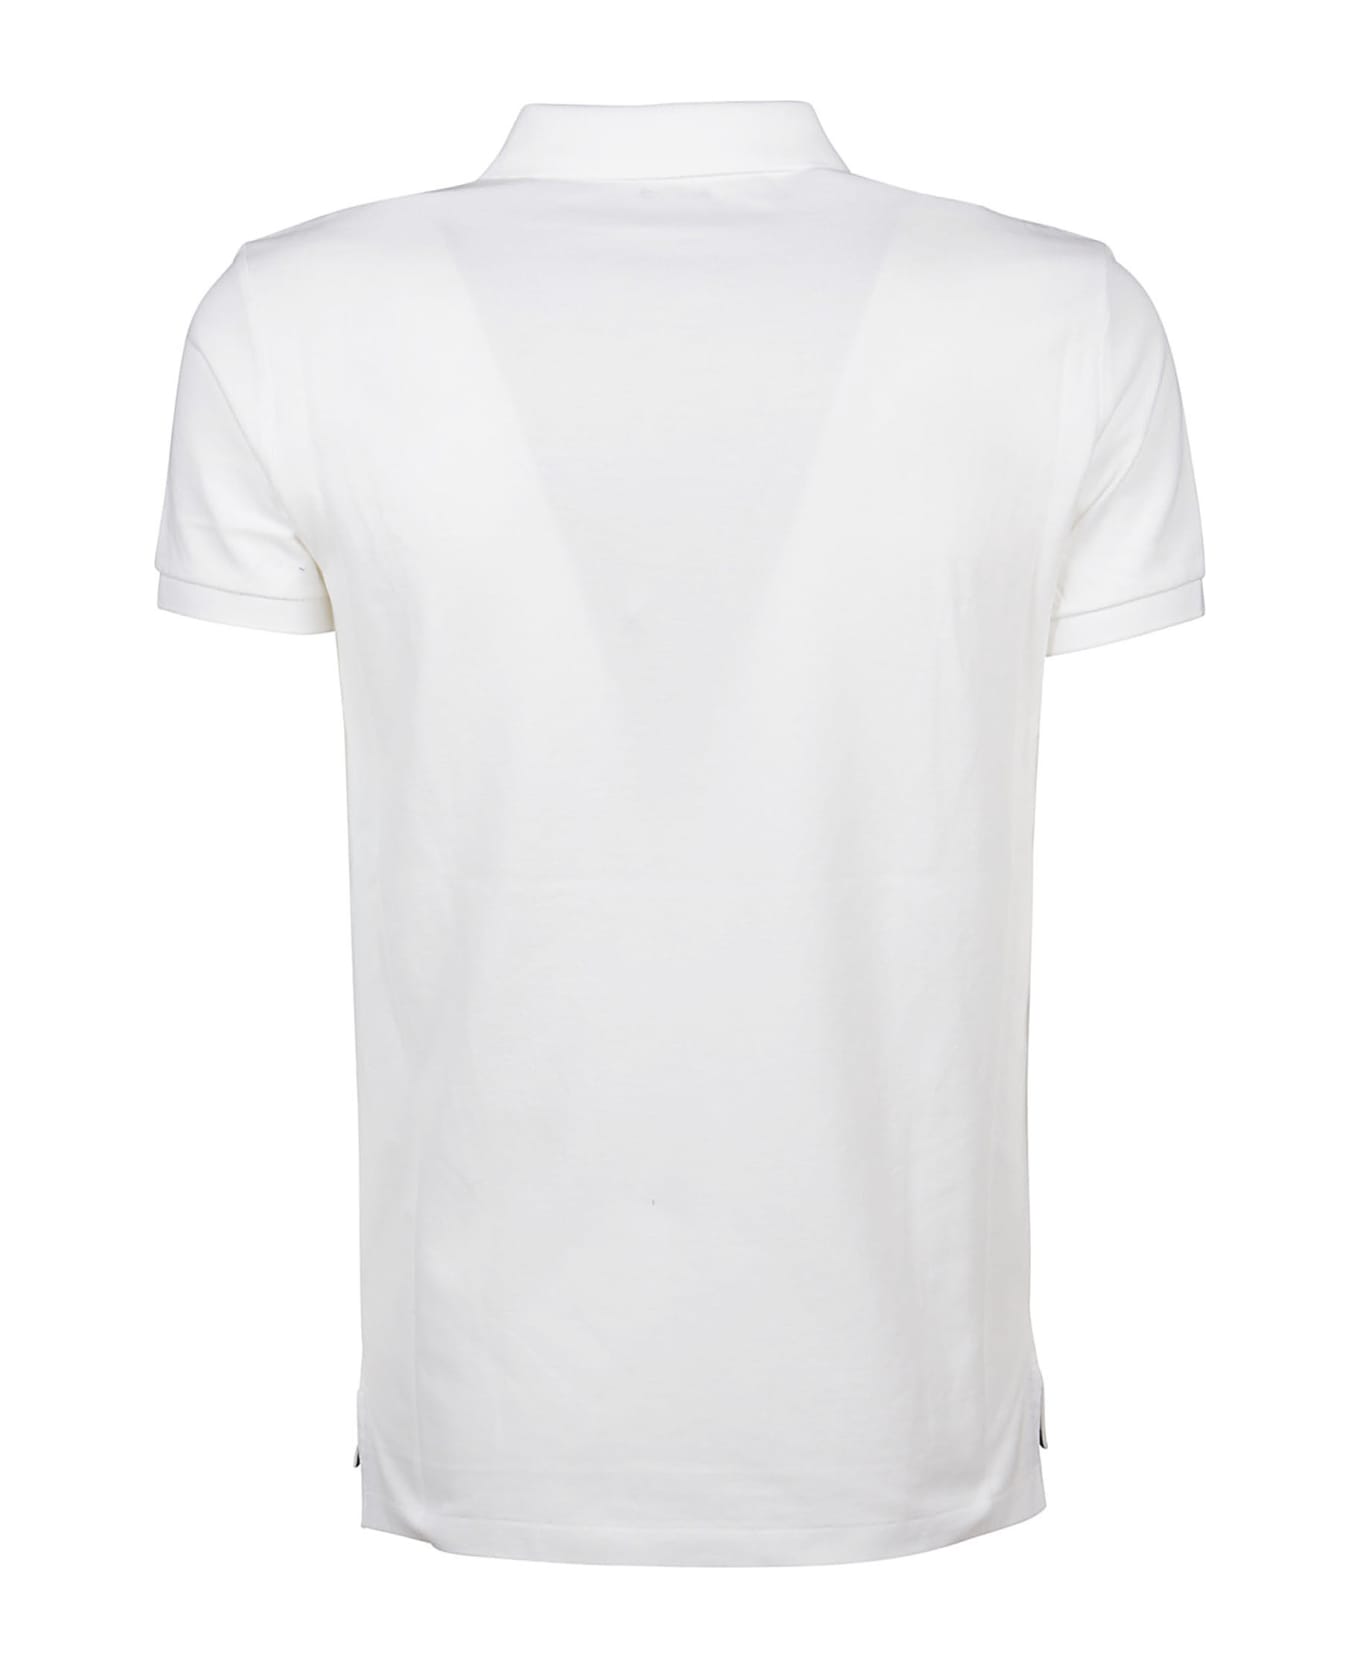 Polo Ralph Lauren Short Sleeve Polo Shirt - White